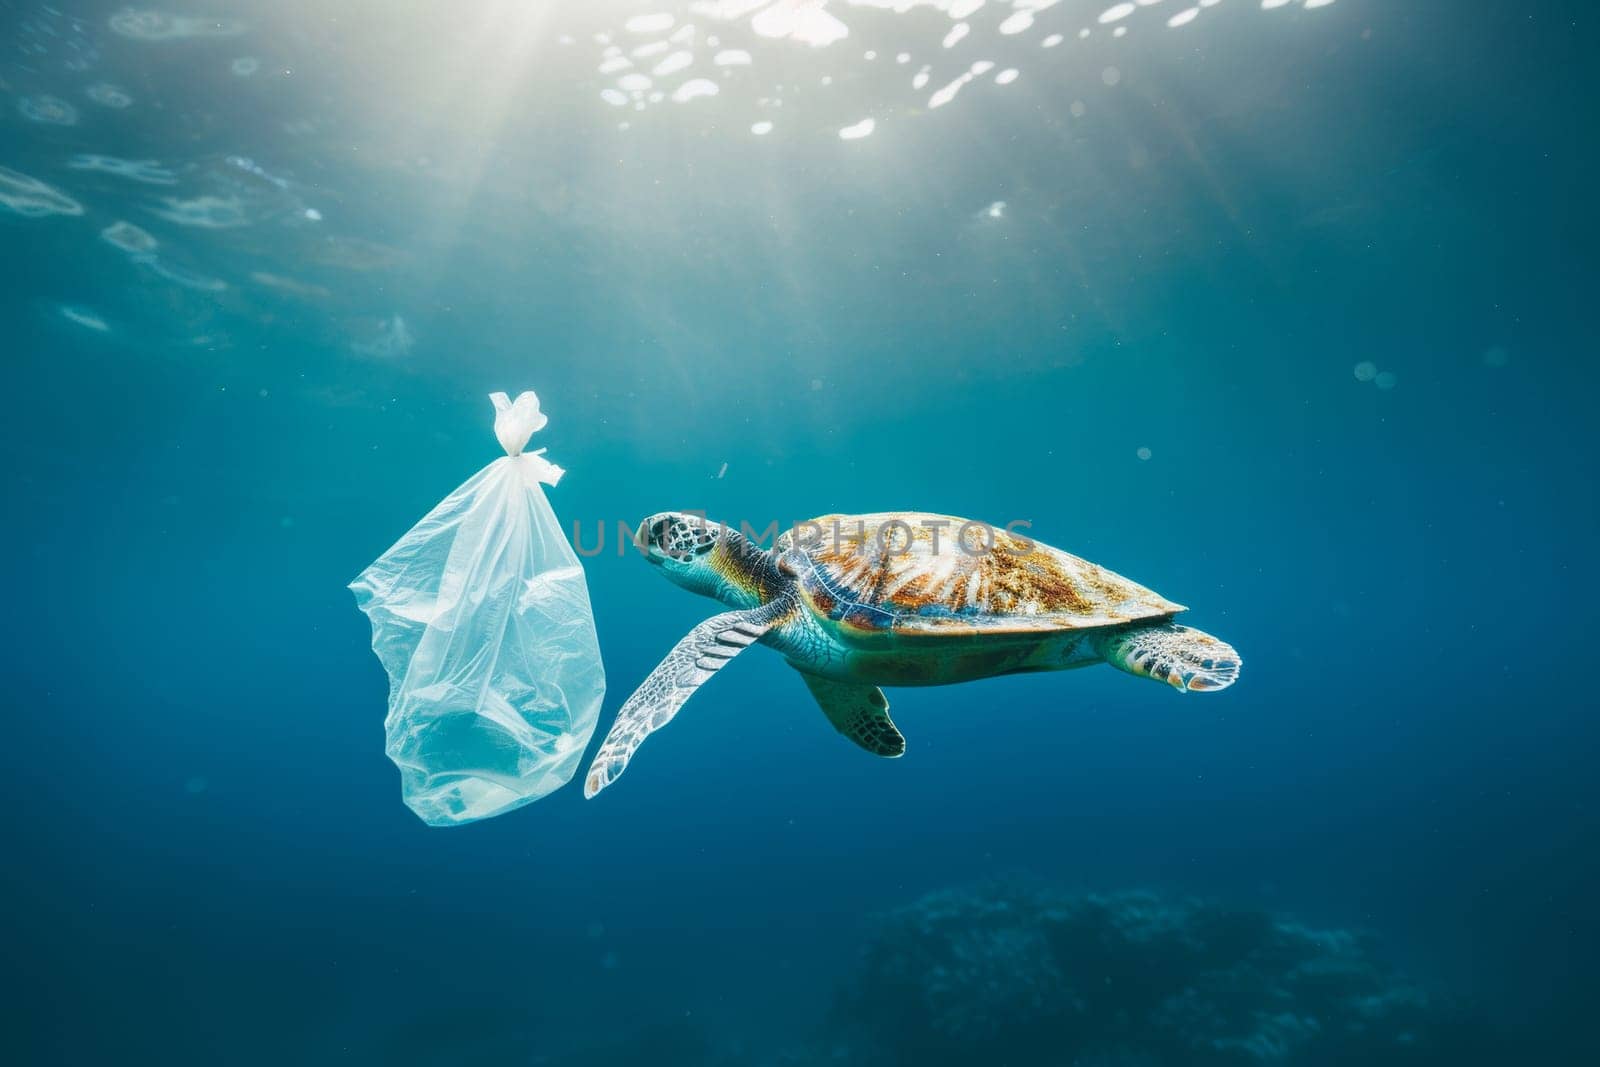 Turtle Swimming in Ocean With Plastic Bag by vladimka